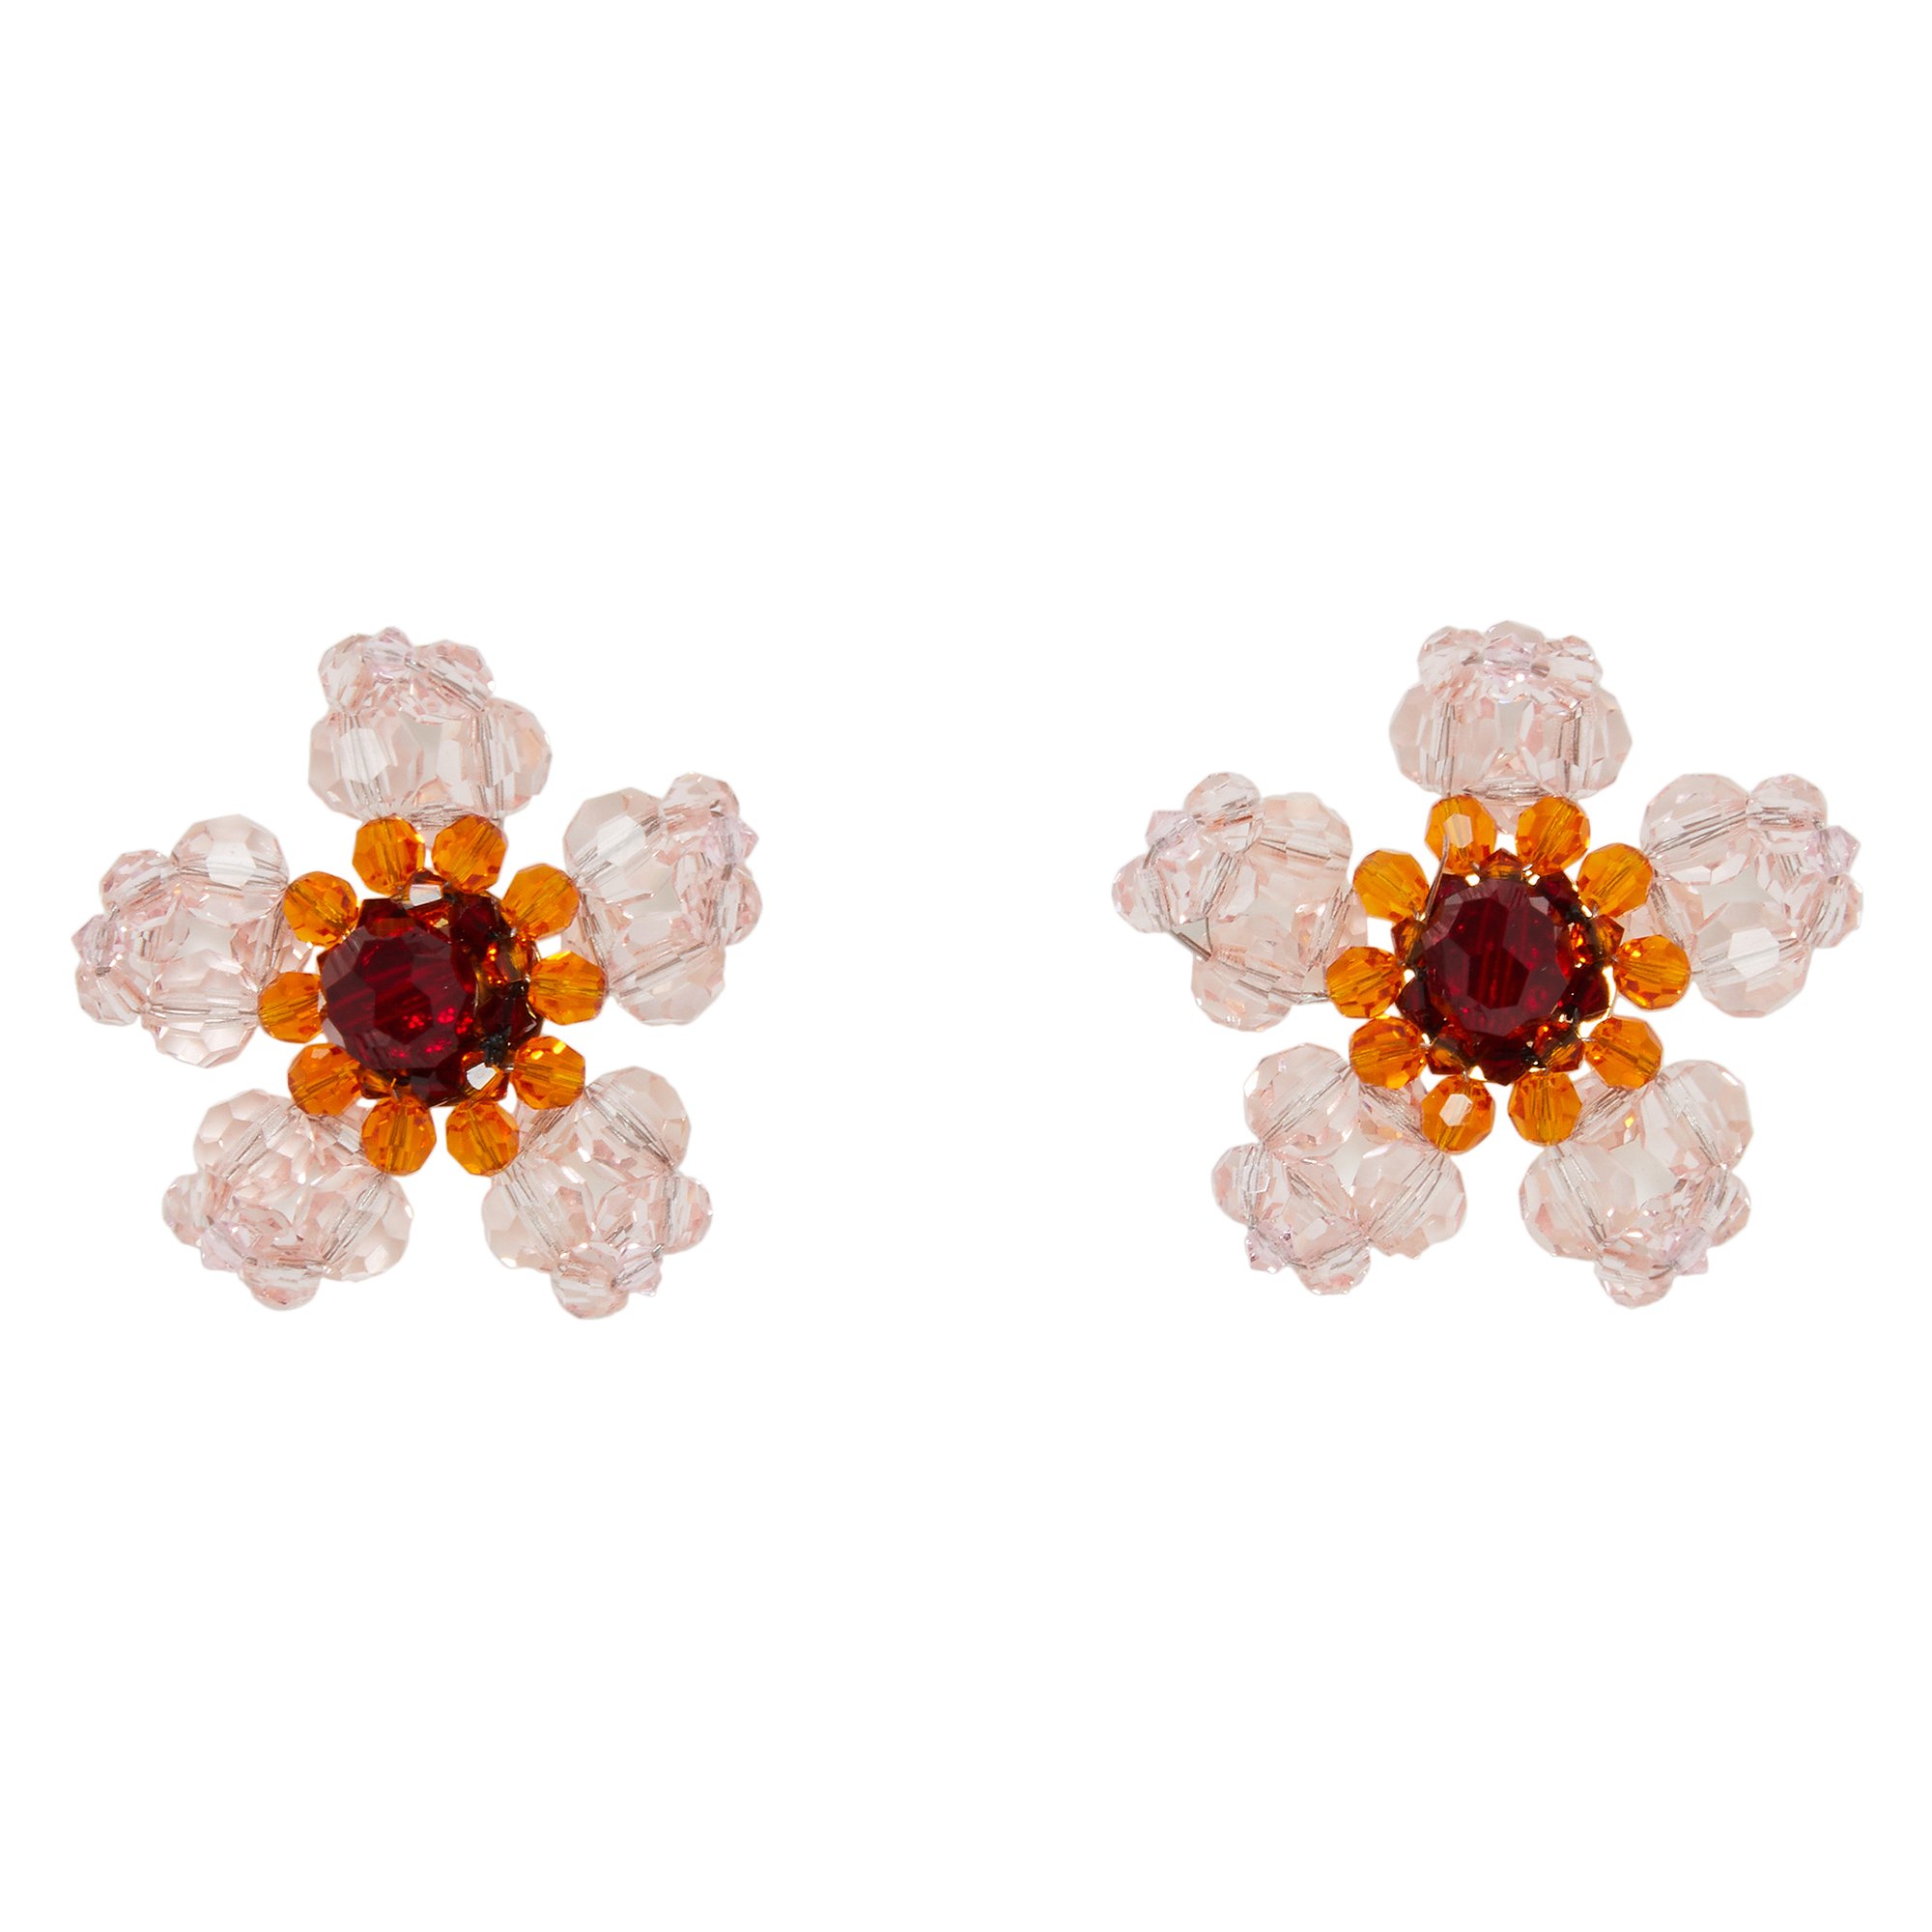 Simone Rocha Daisy Leaf Cluster crystal drop earrings - Silver